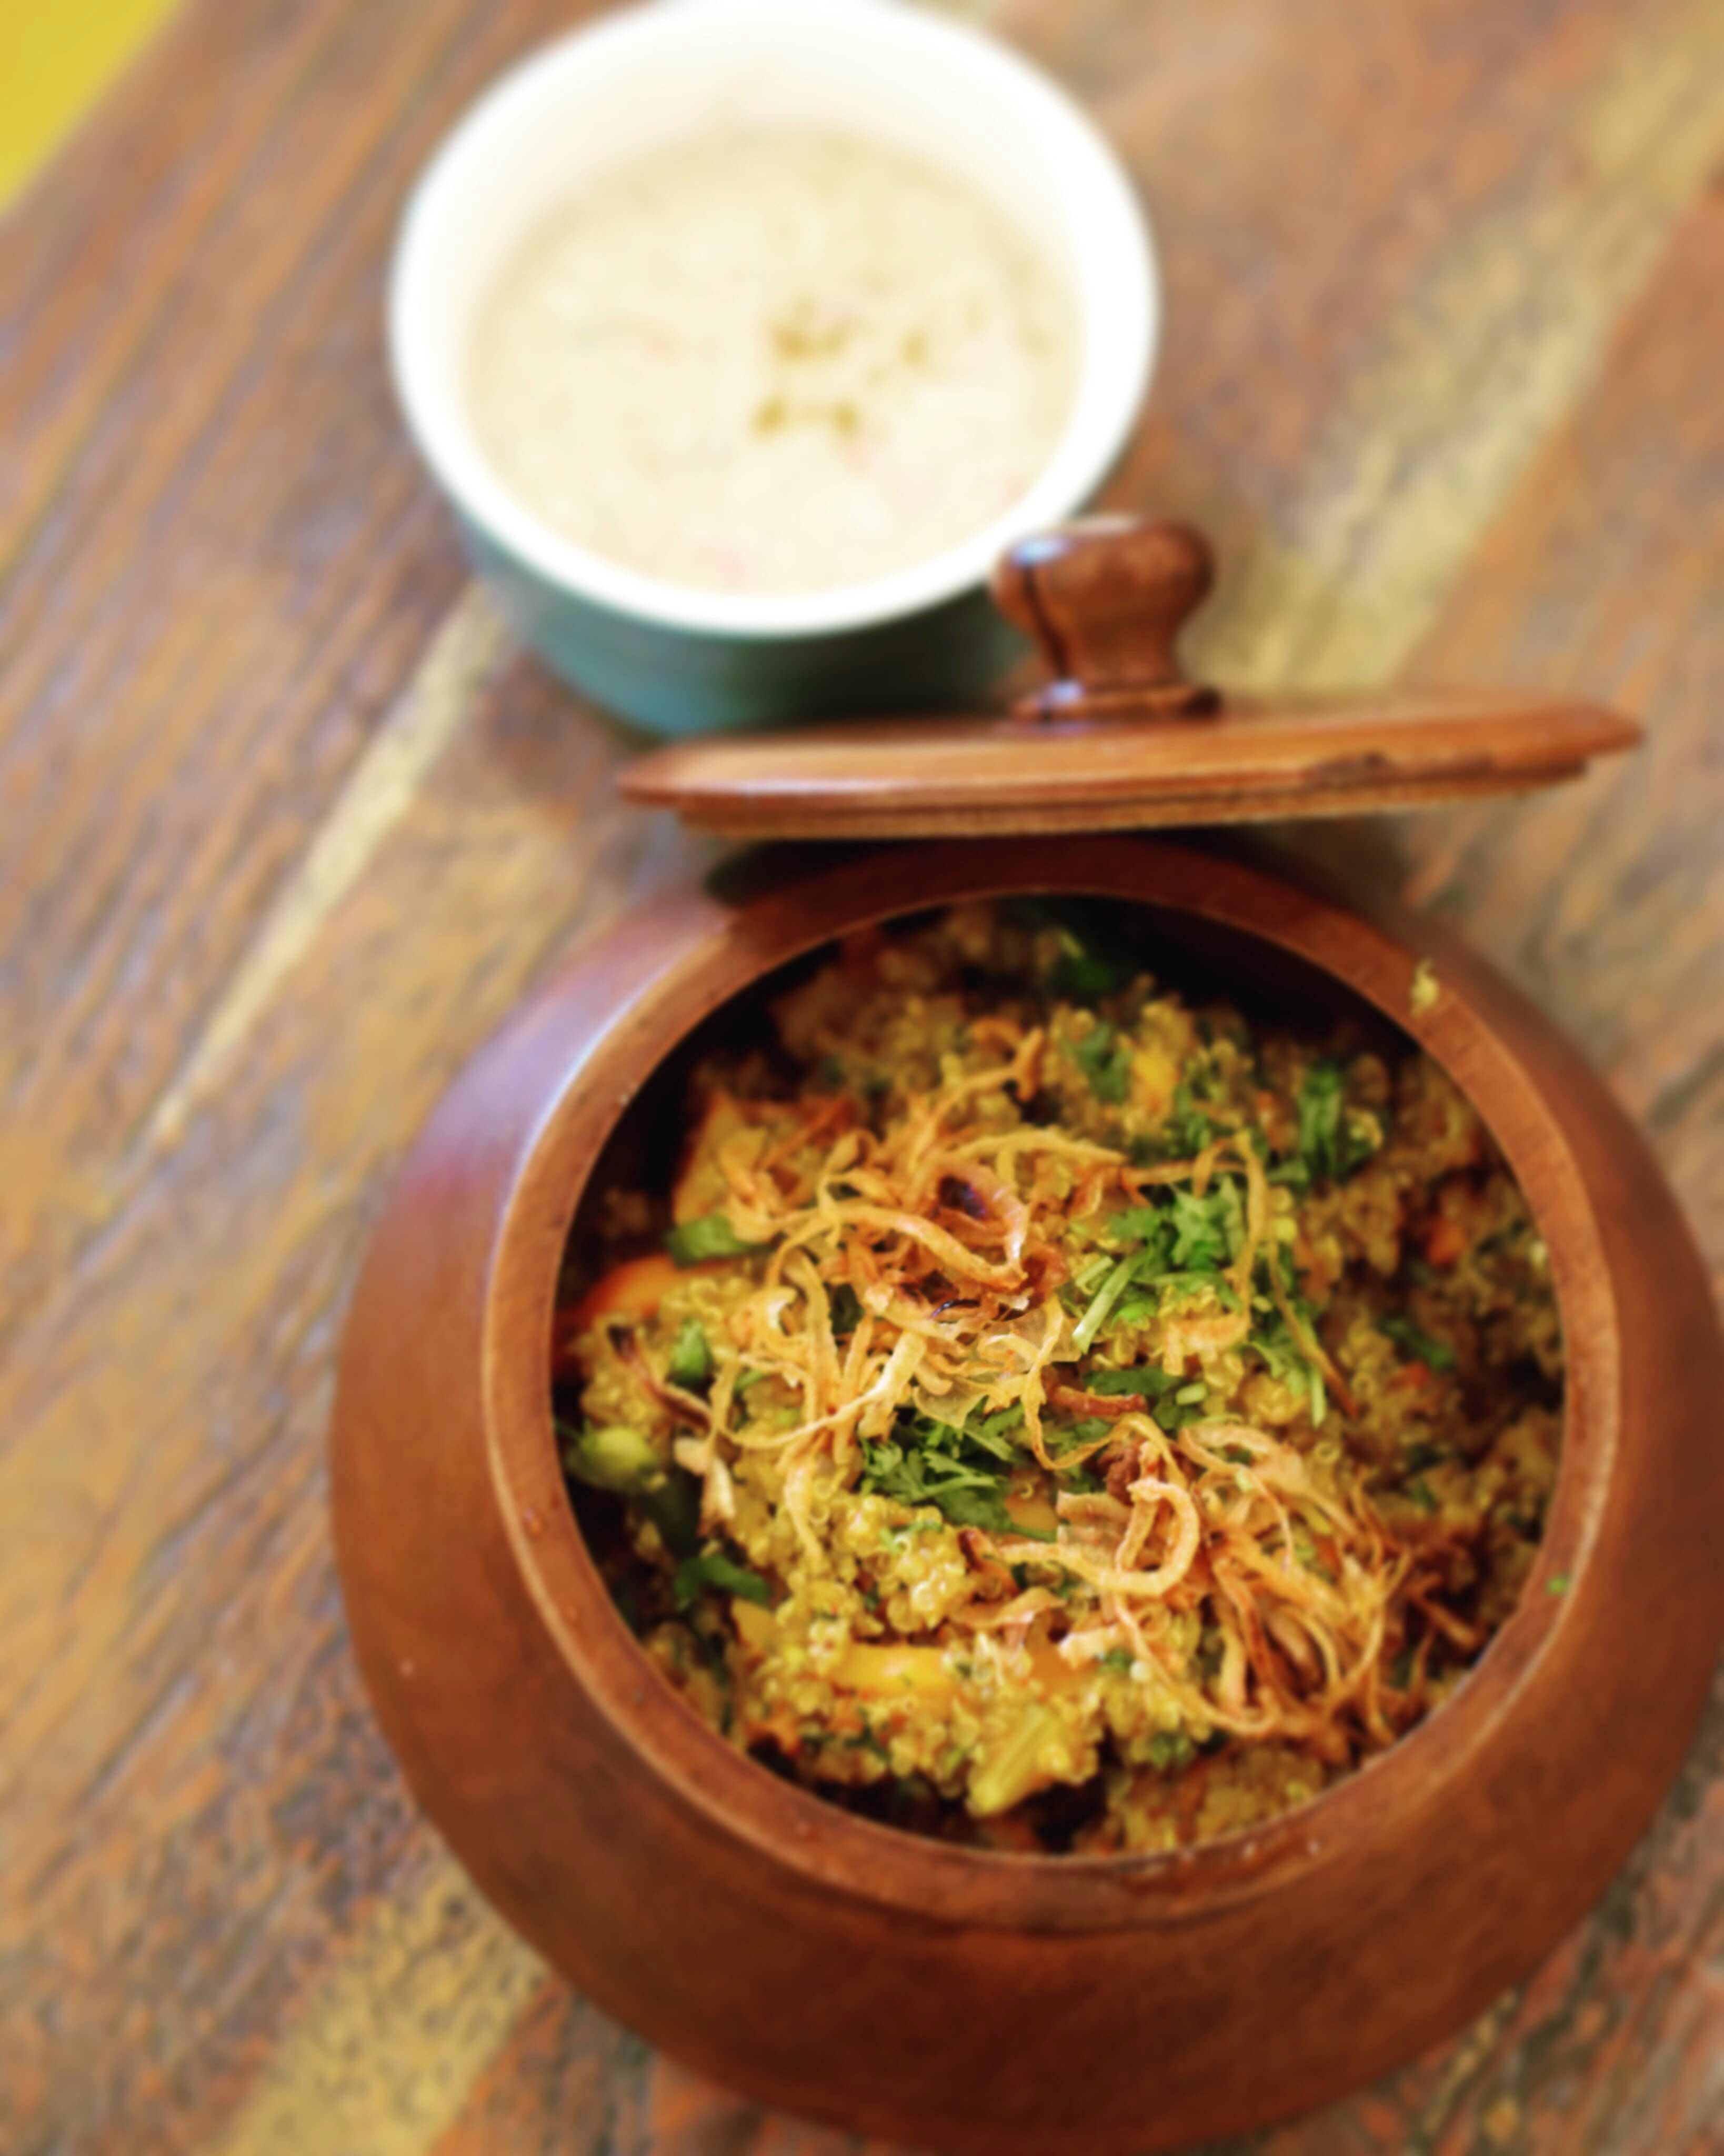 Dish,Food,Cuisine,Ingredient,Produce,Recipe,Indian cuisine,Biryani